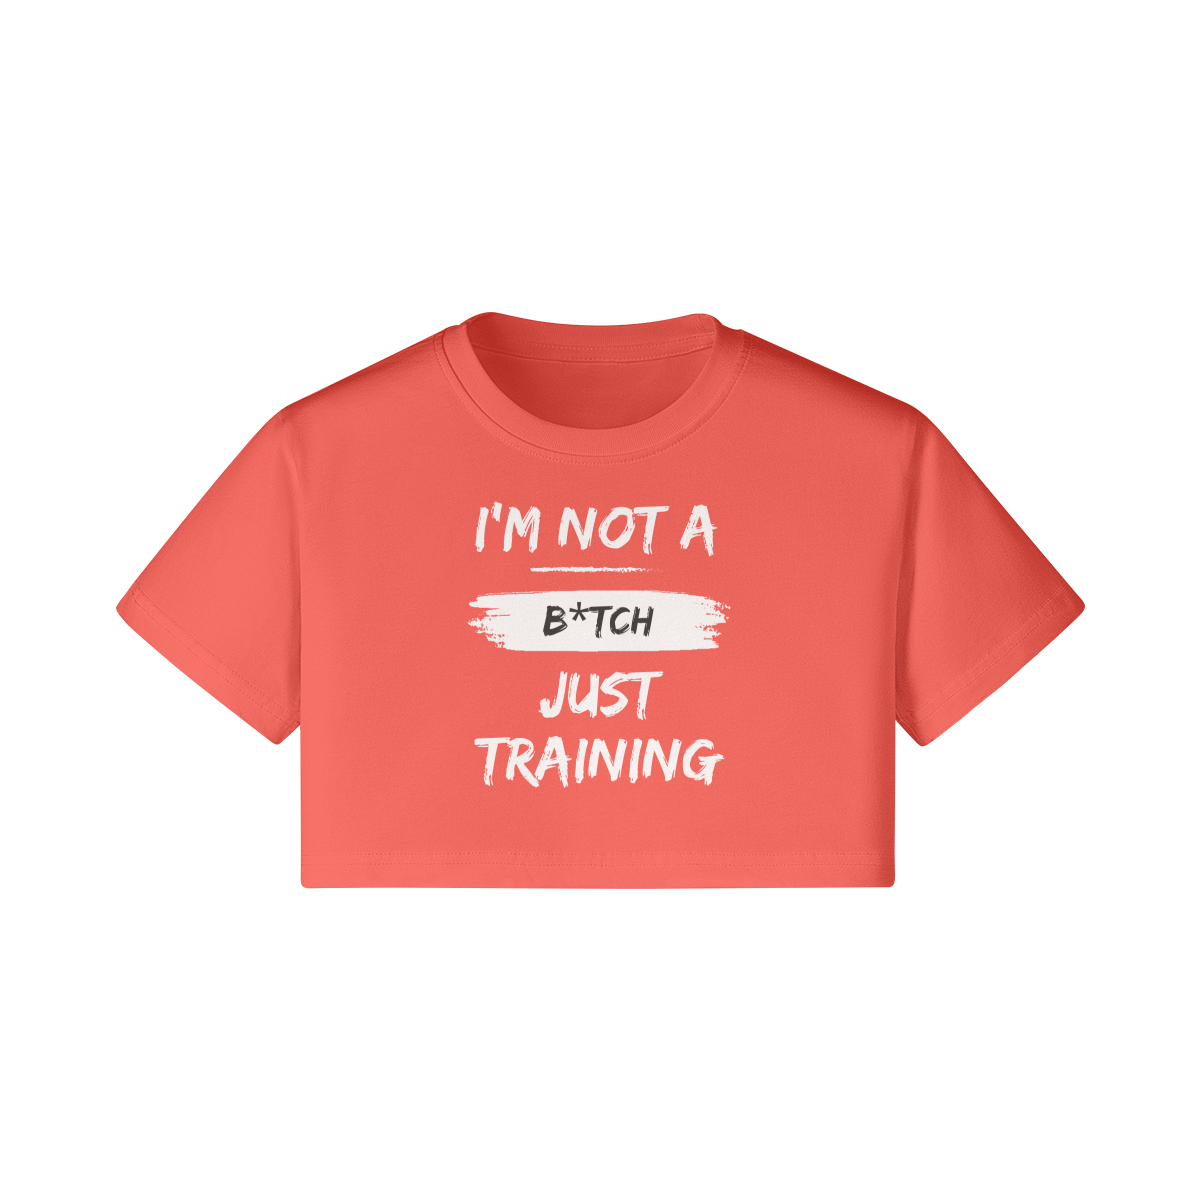 I'm not a B*tch just training